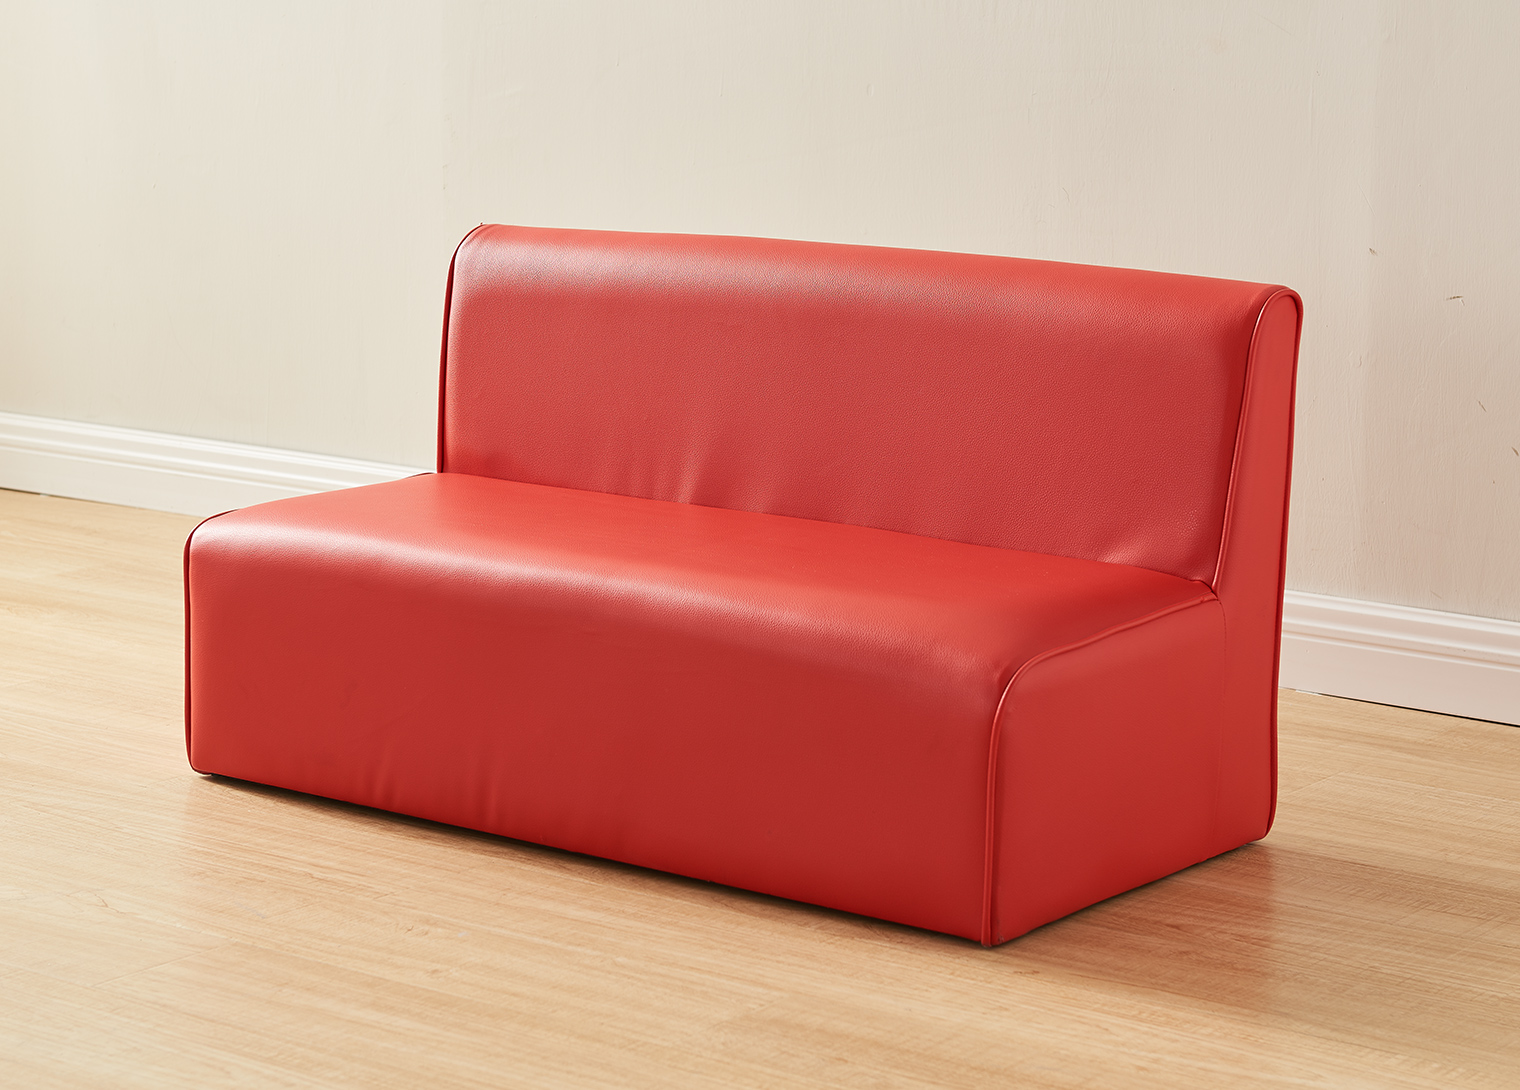 Modular Kids Sofa -  2-Seat Chair - Red